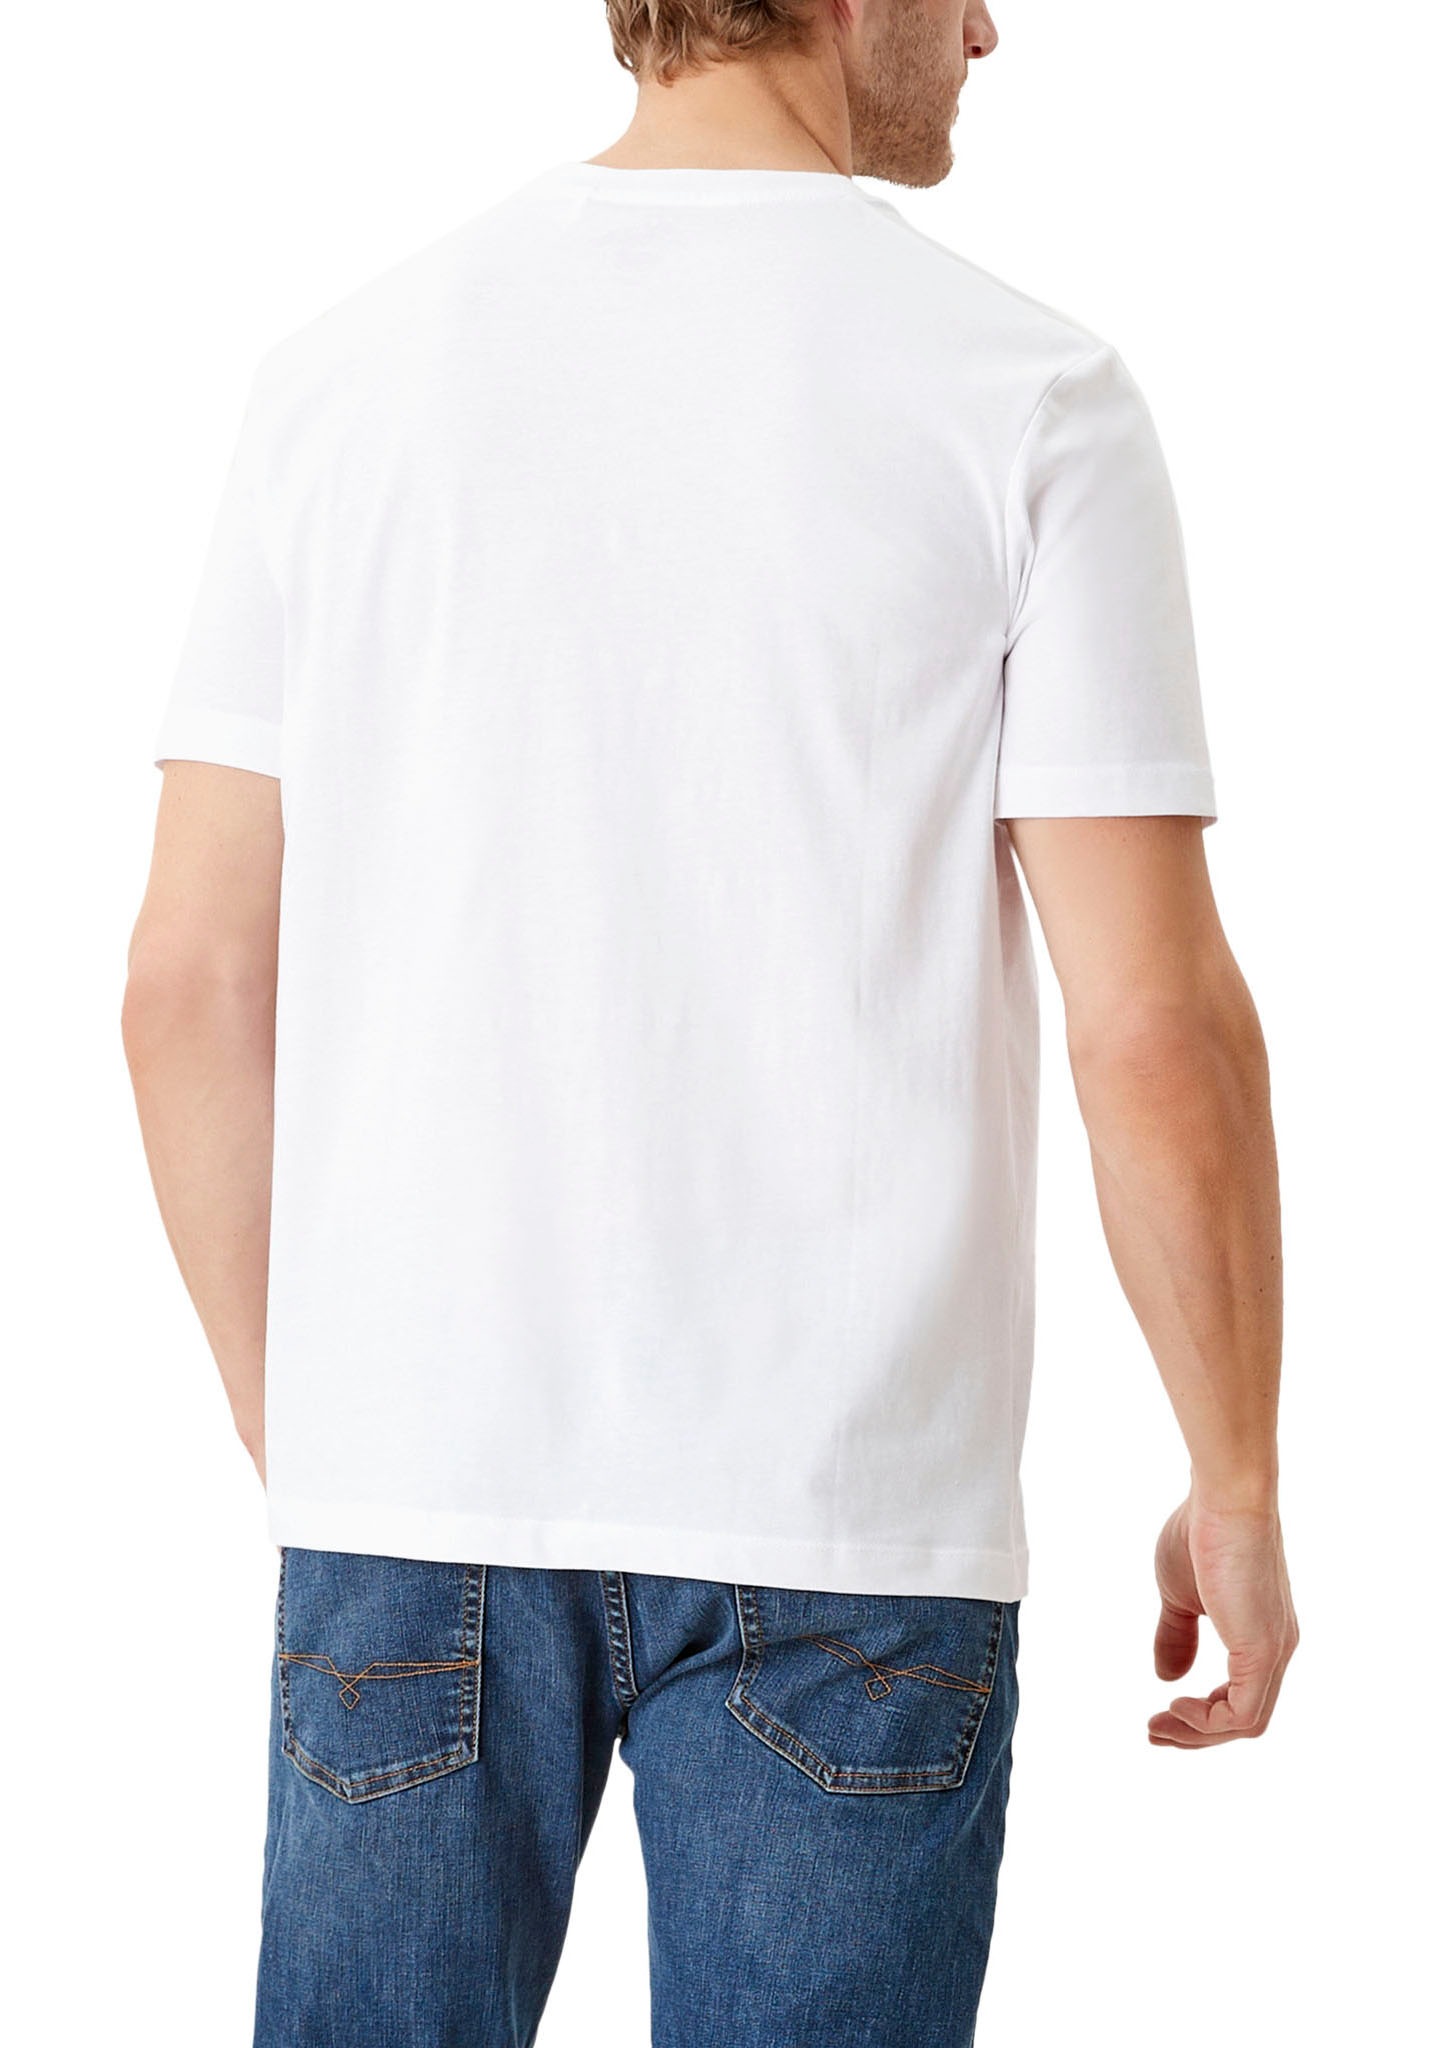 s.Oliver T-Shirt, mit Frontlogoprint